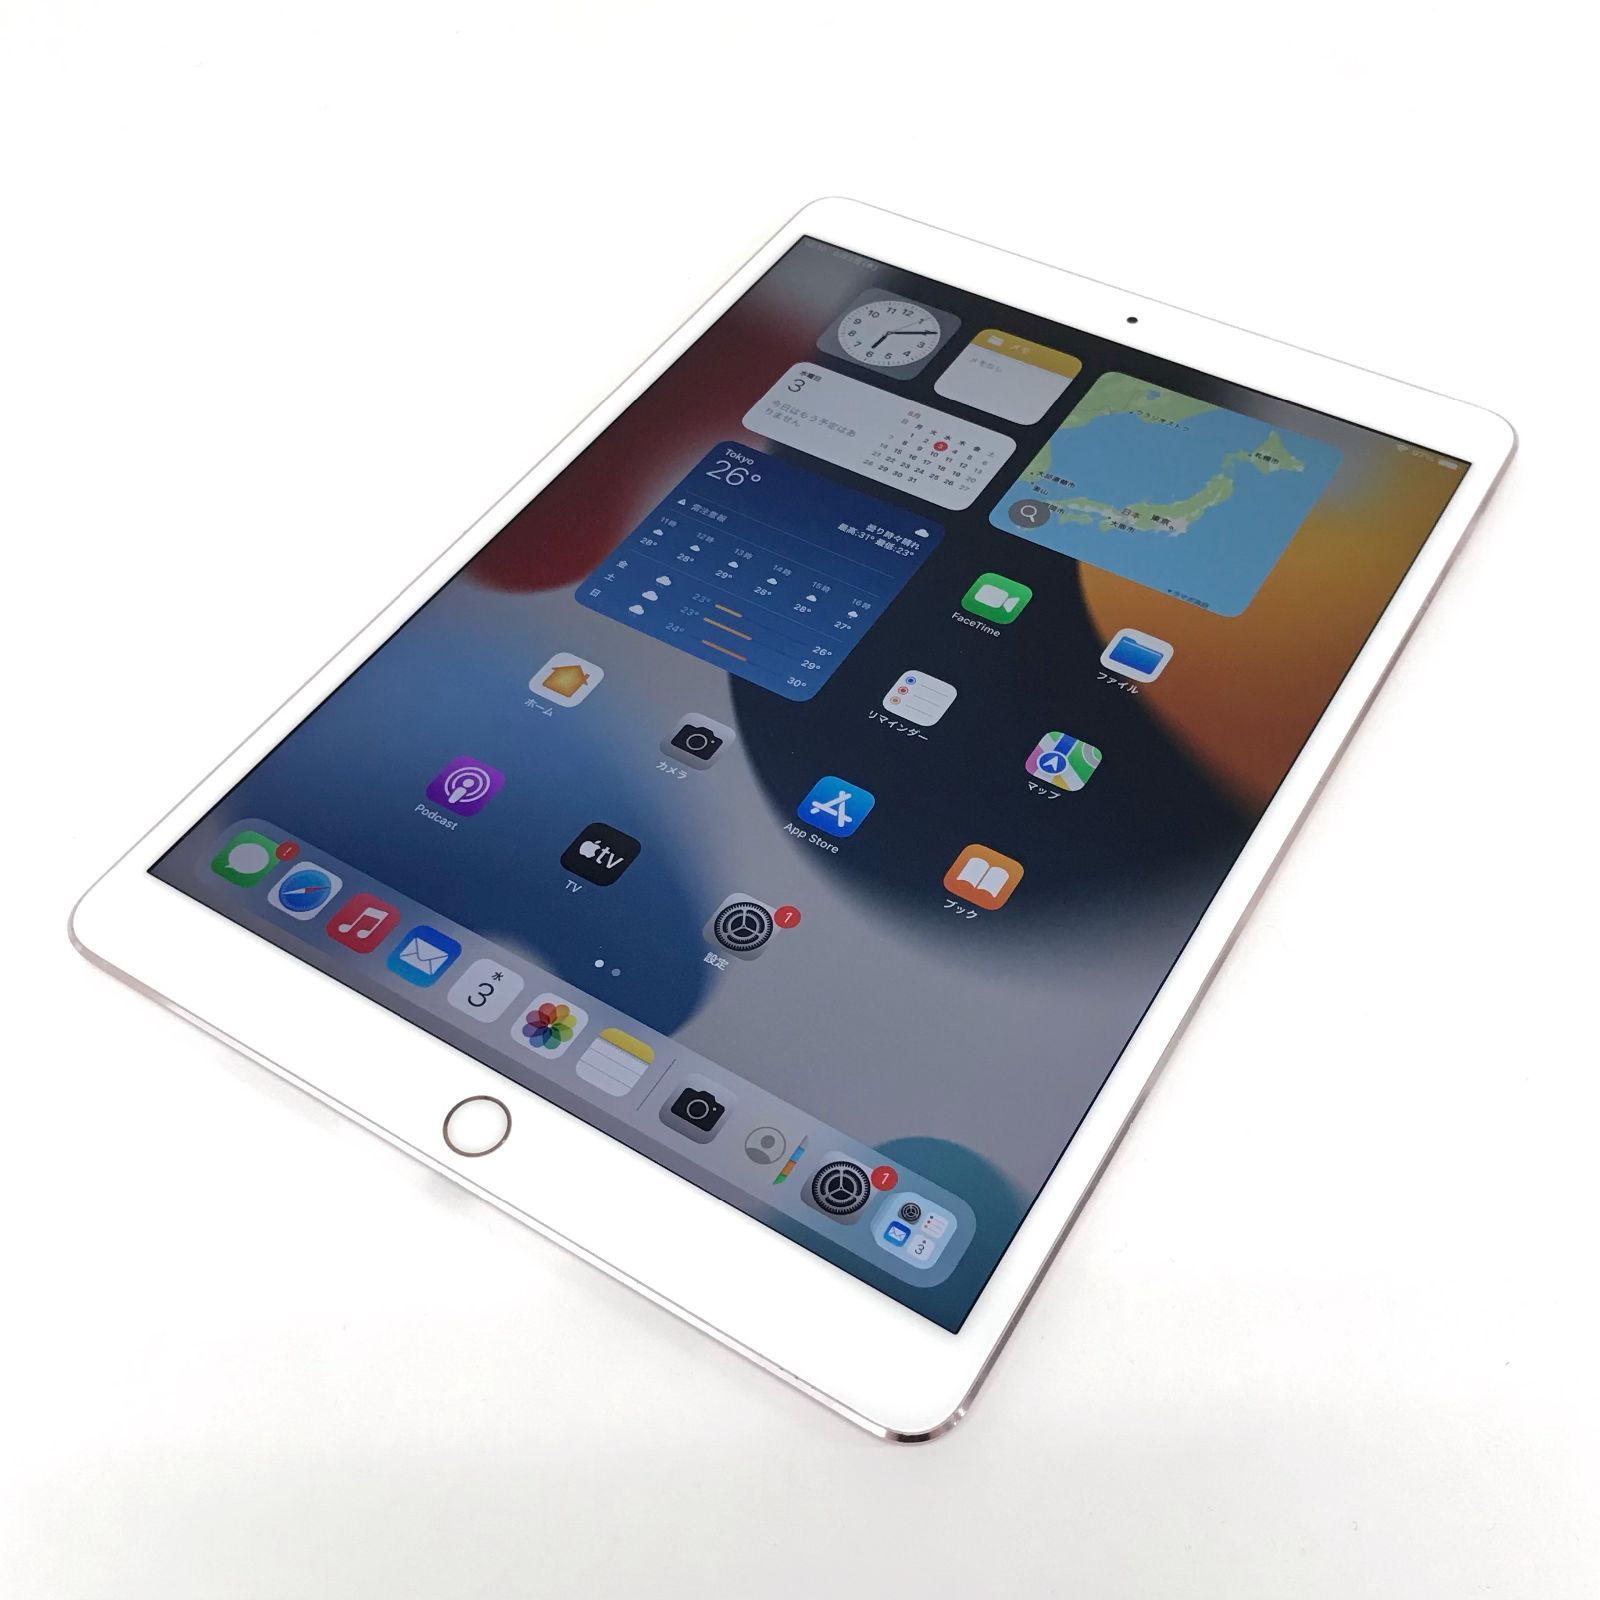 θ iPad Pro 10.5インチ Wi-Fi 256GB ローズゴールド - 買取ELITE